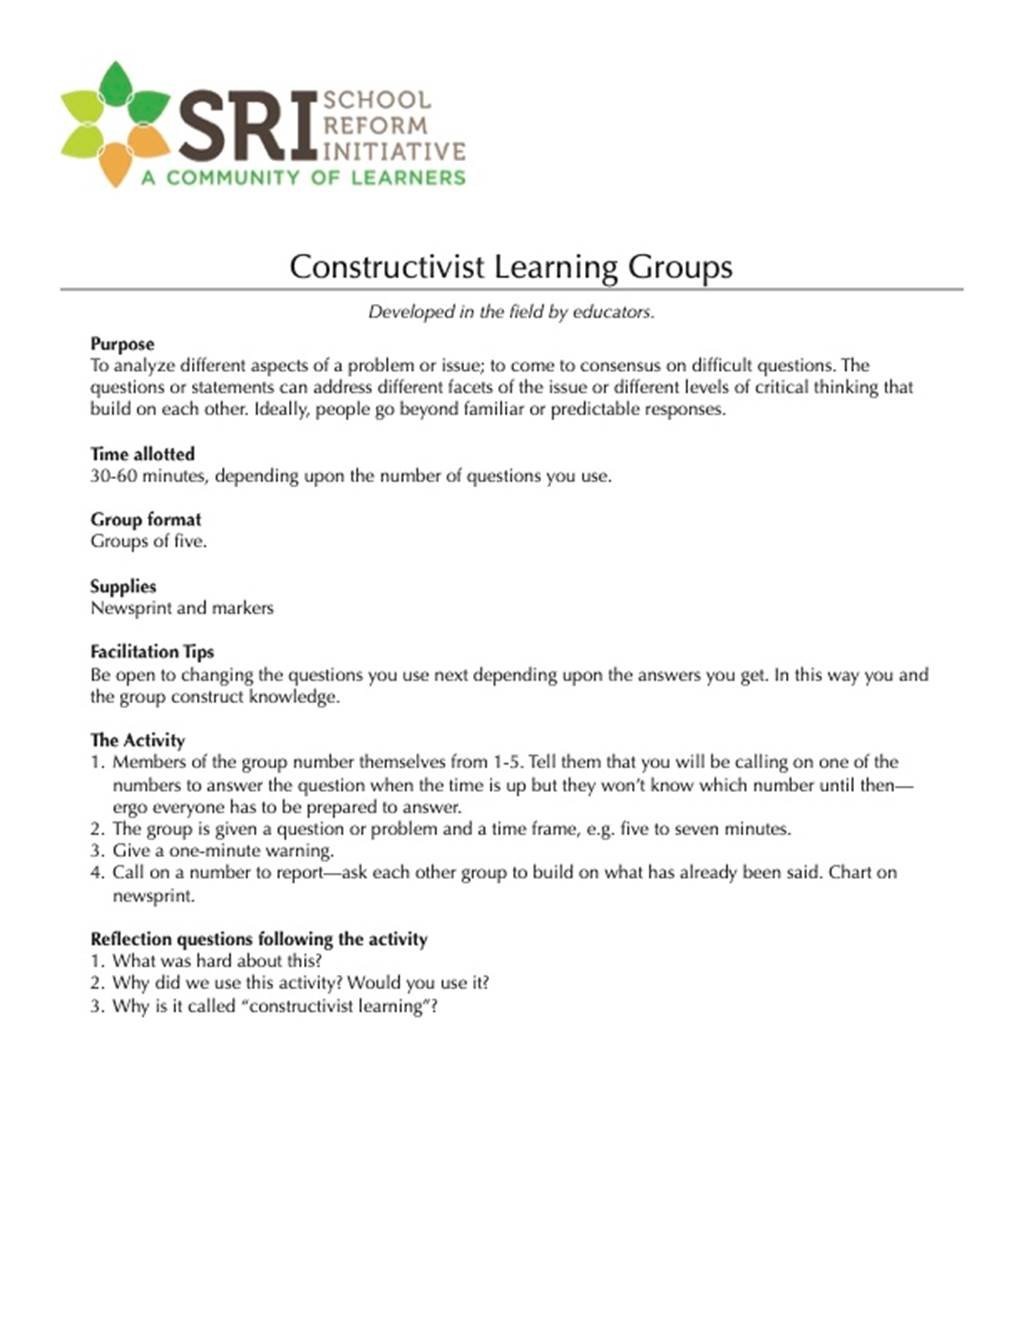 Constructivist Learning Groups - Document image